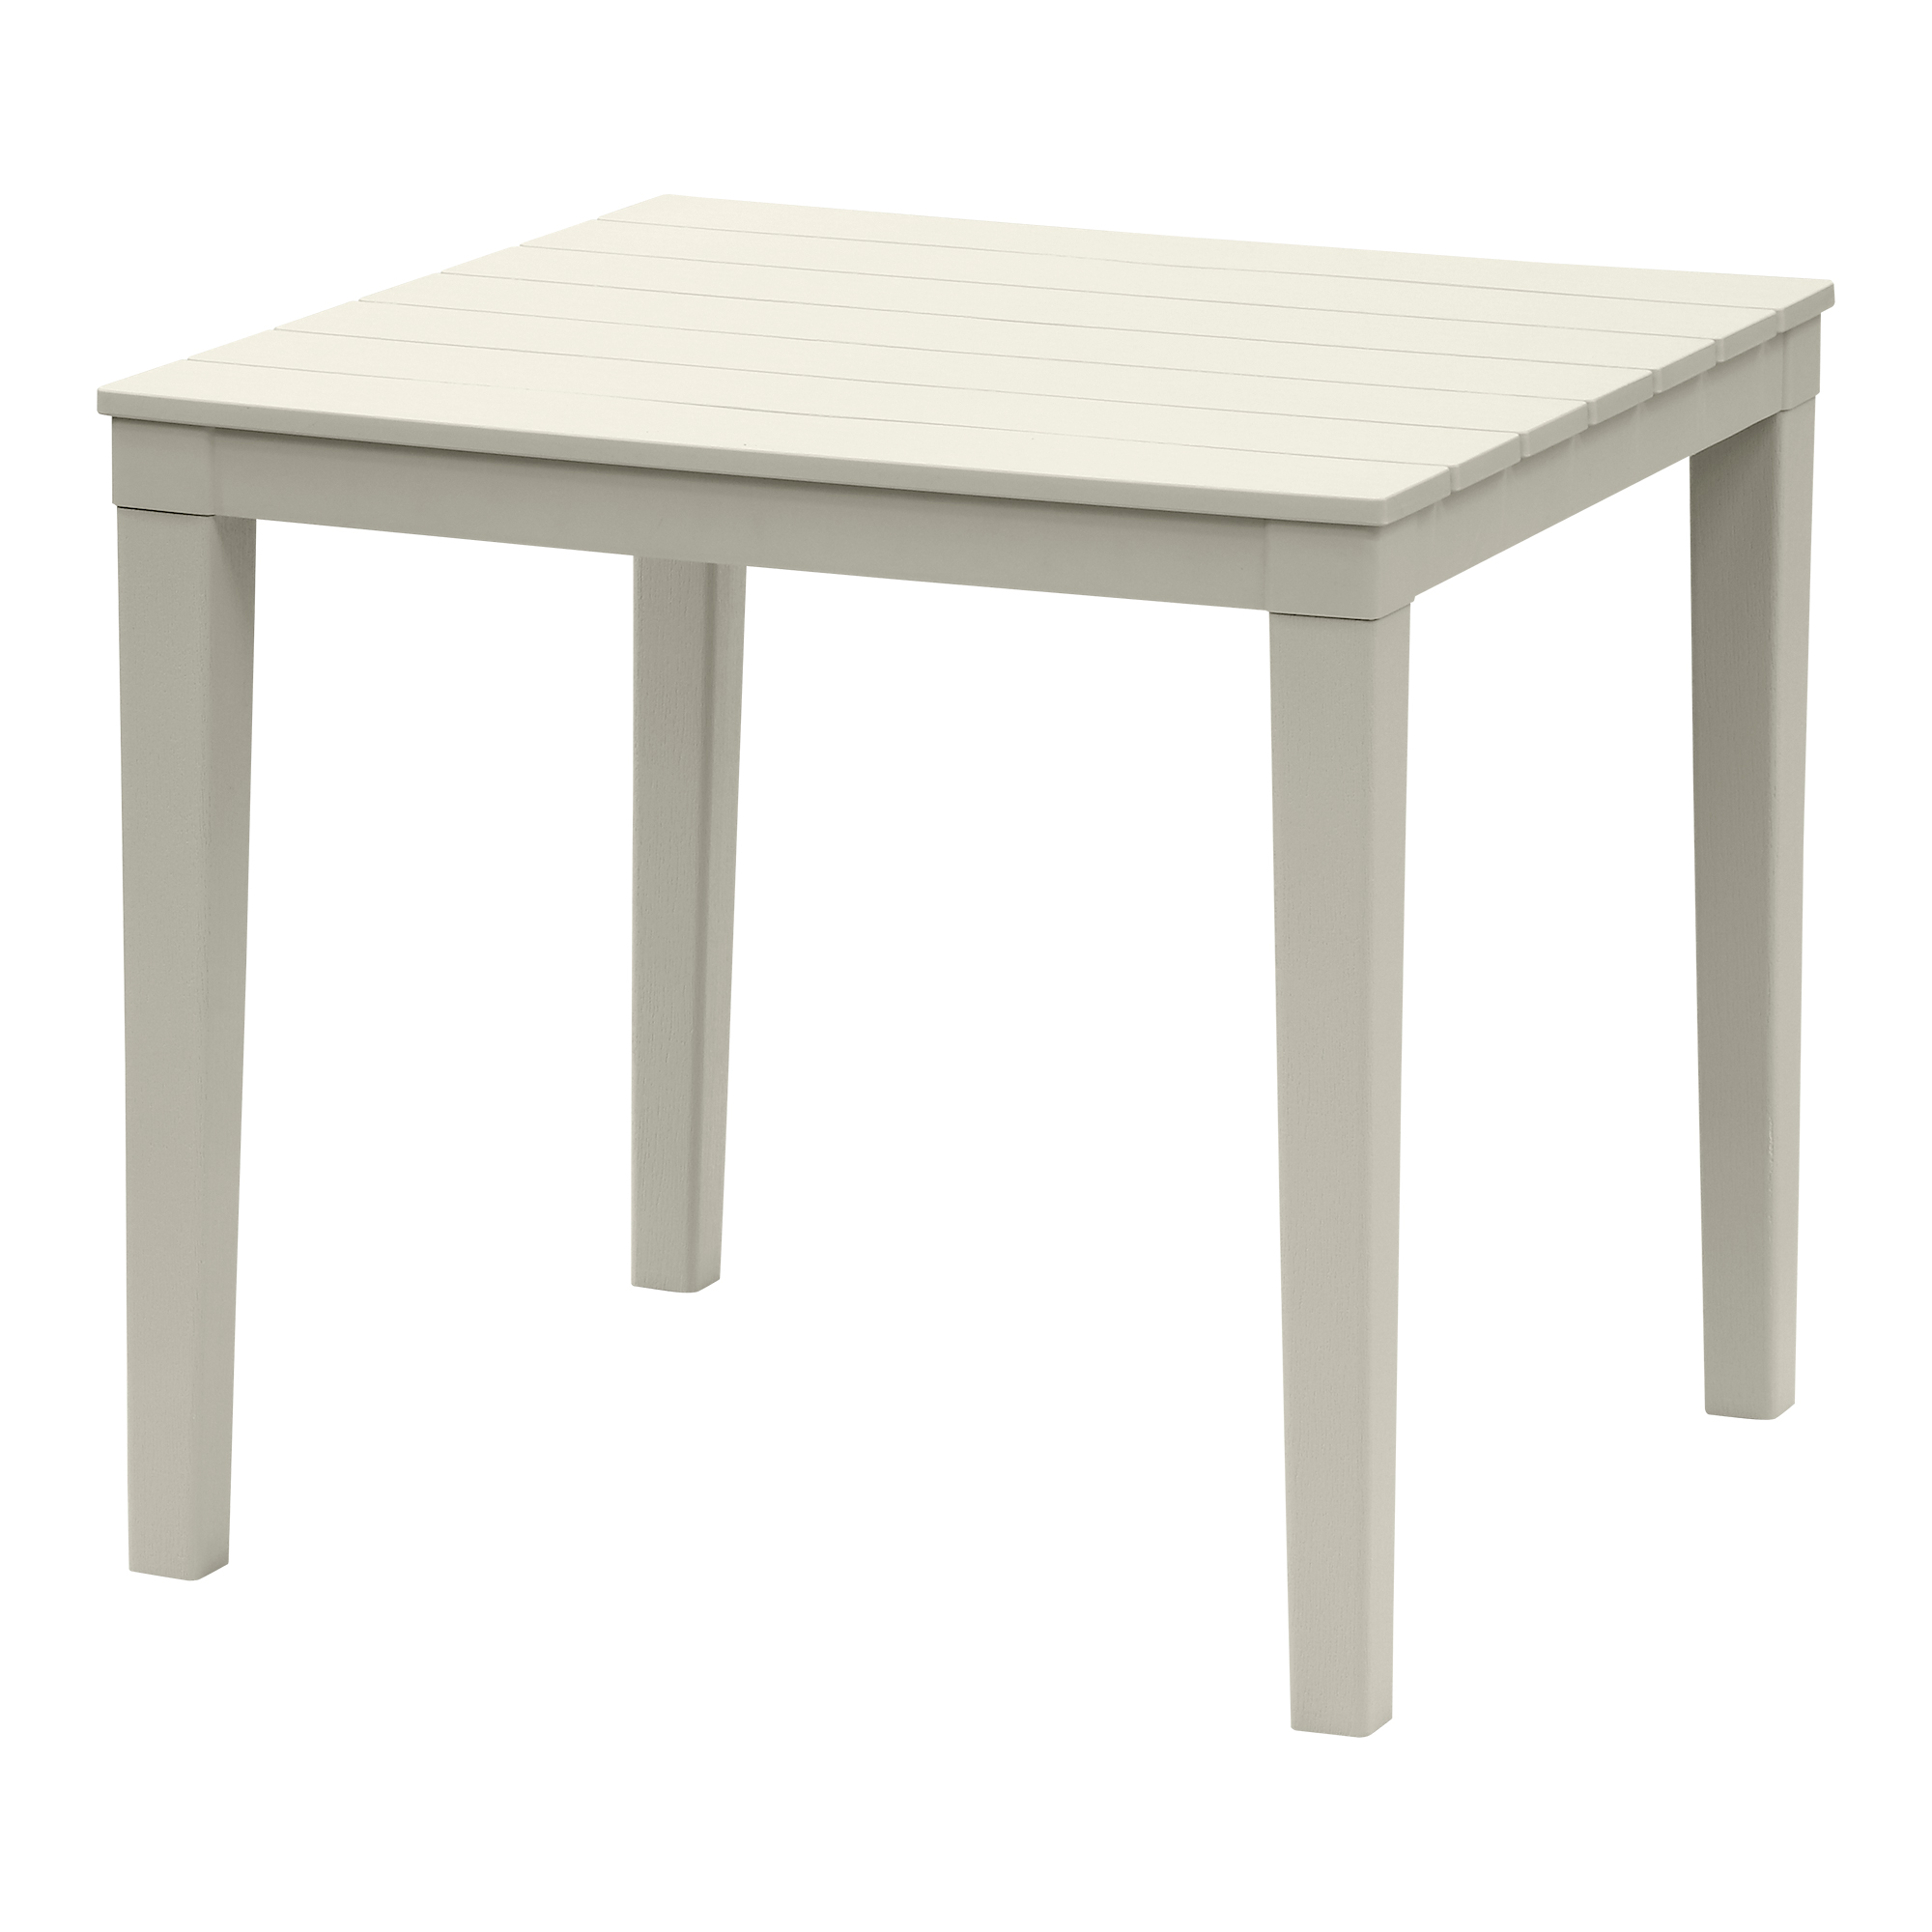 Стол квадратный Элластик пласт Прованс Grey 80x80 см, цвет серый